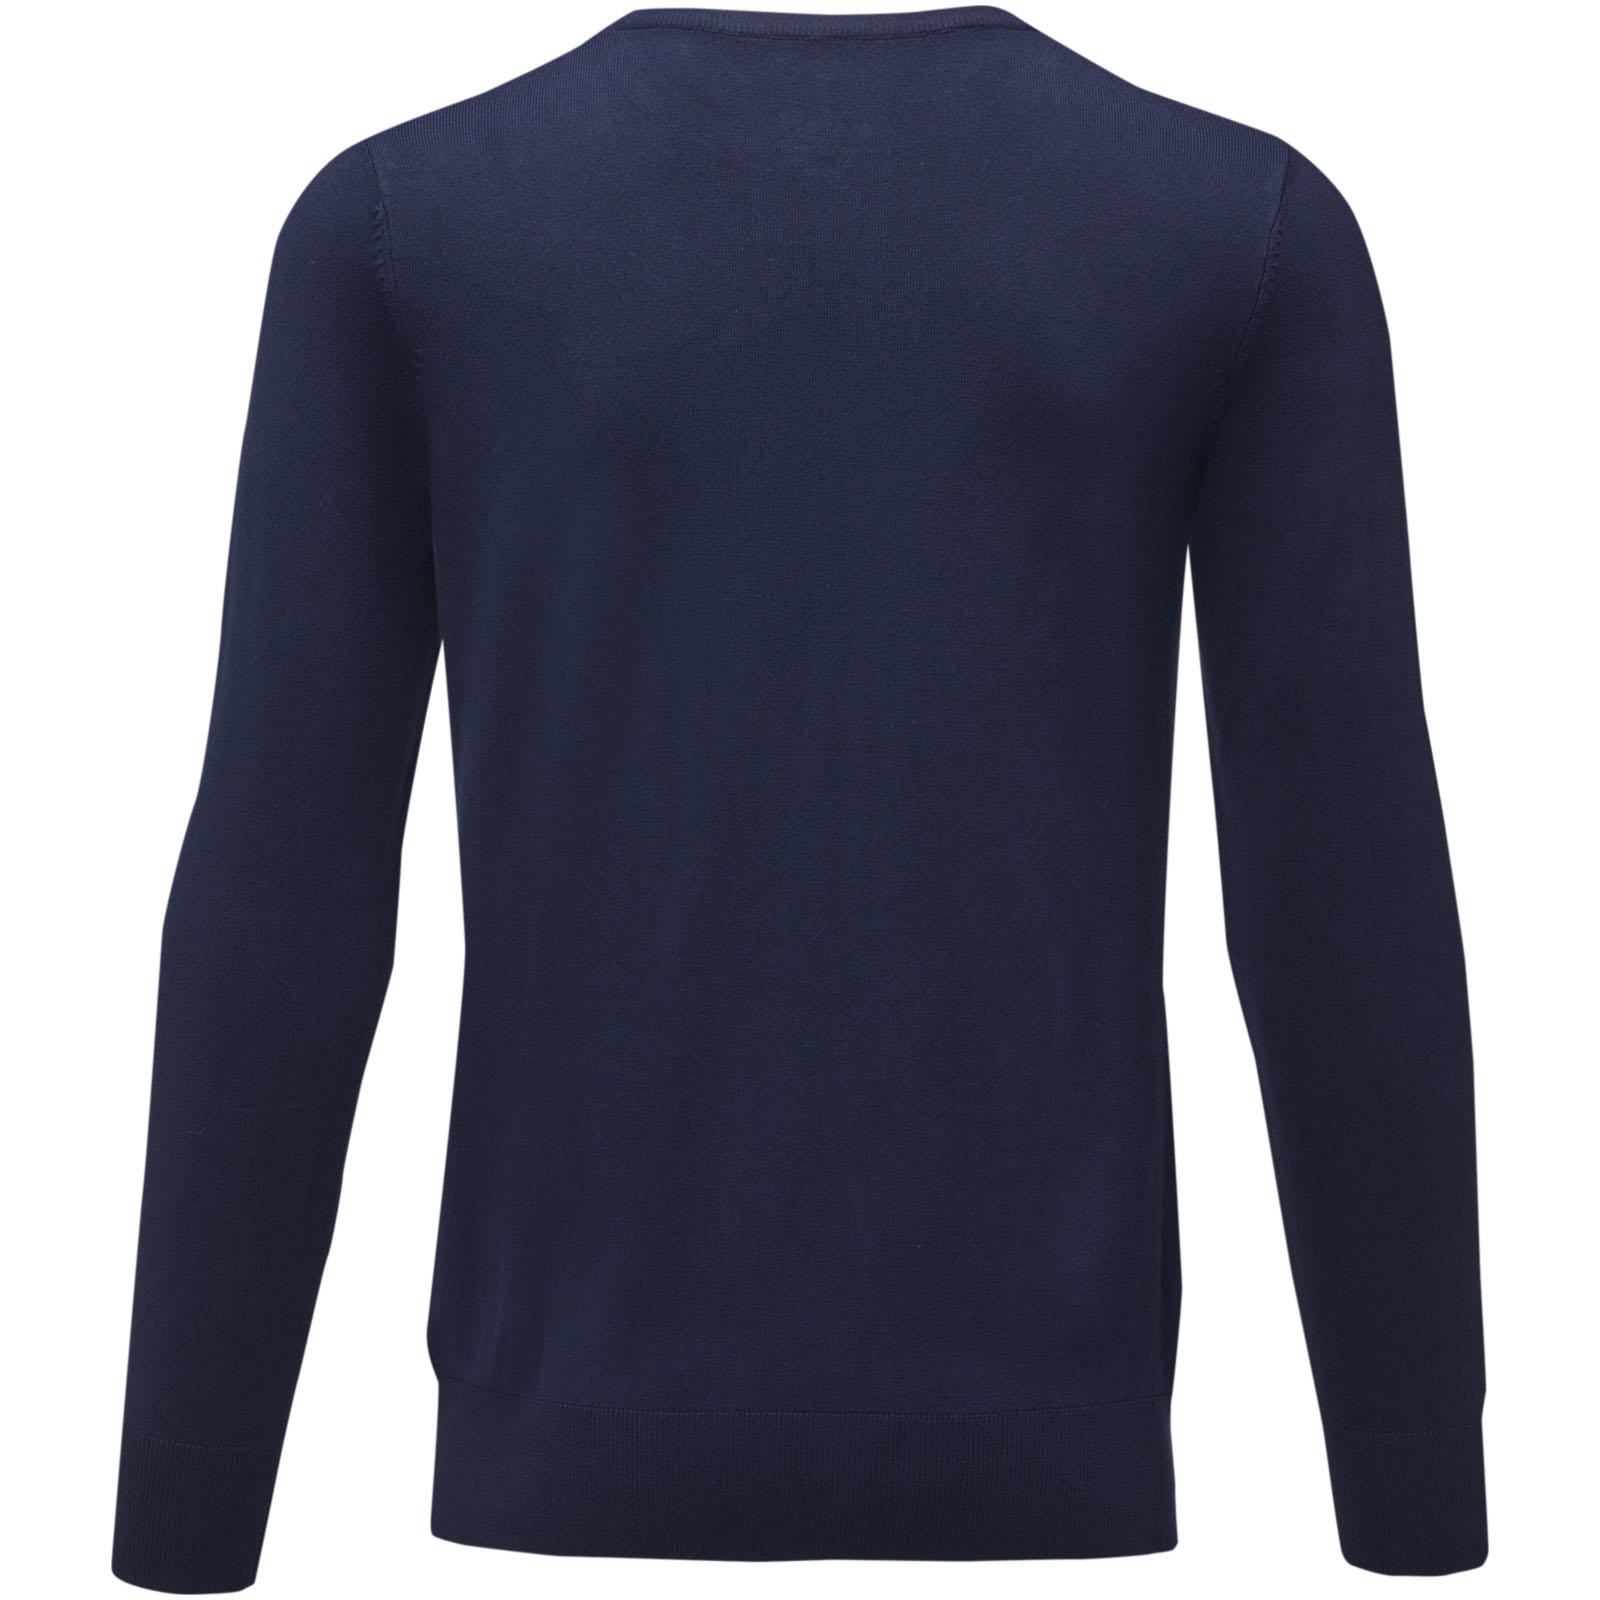 Advertising Pullovers - Merrit men's crewneck pullover - 2